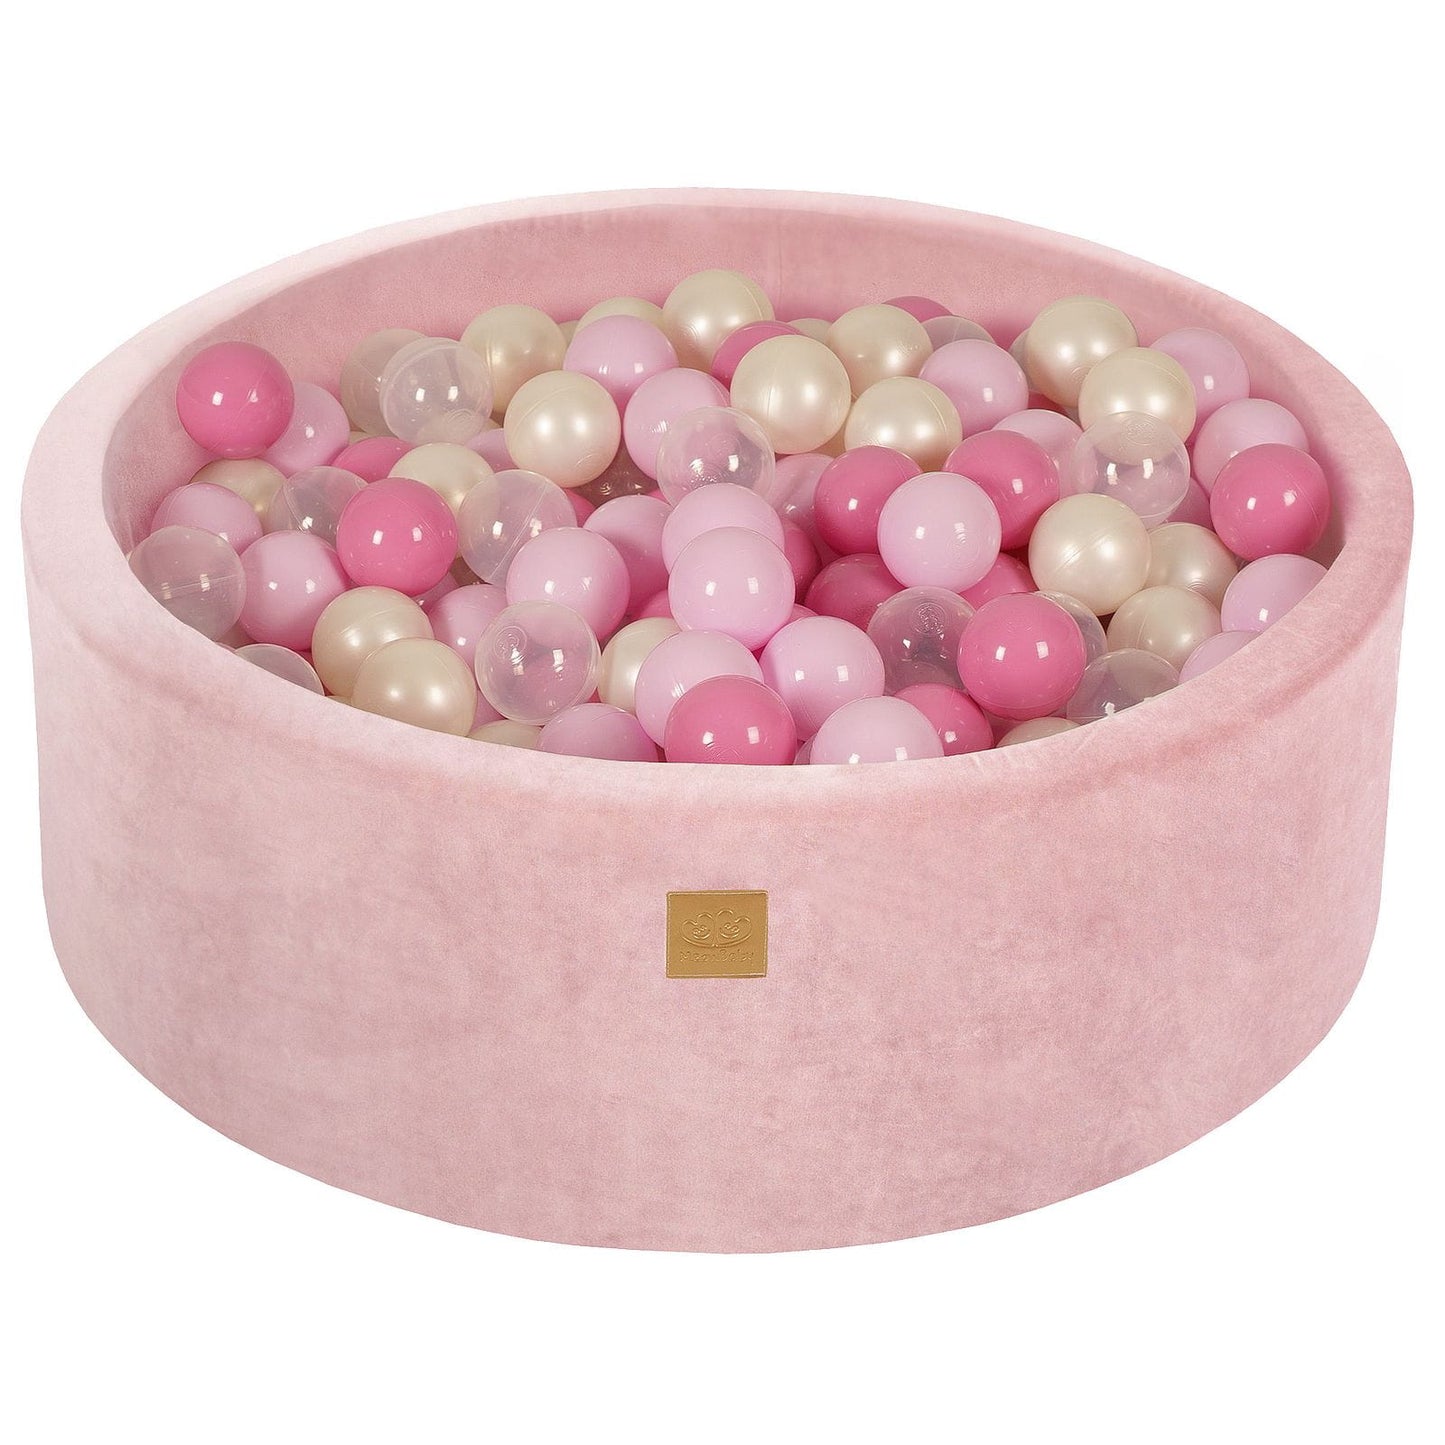 Velvet Round Foam Ball Pit with 200 Balls - Pale Pink